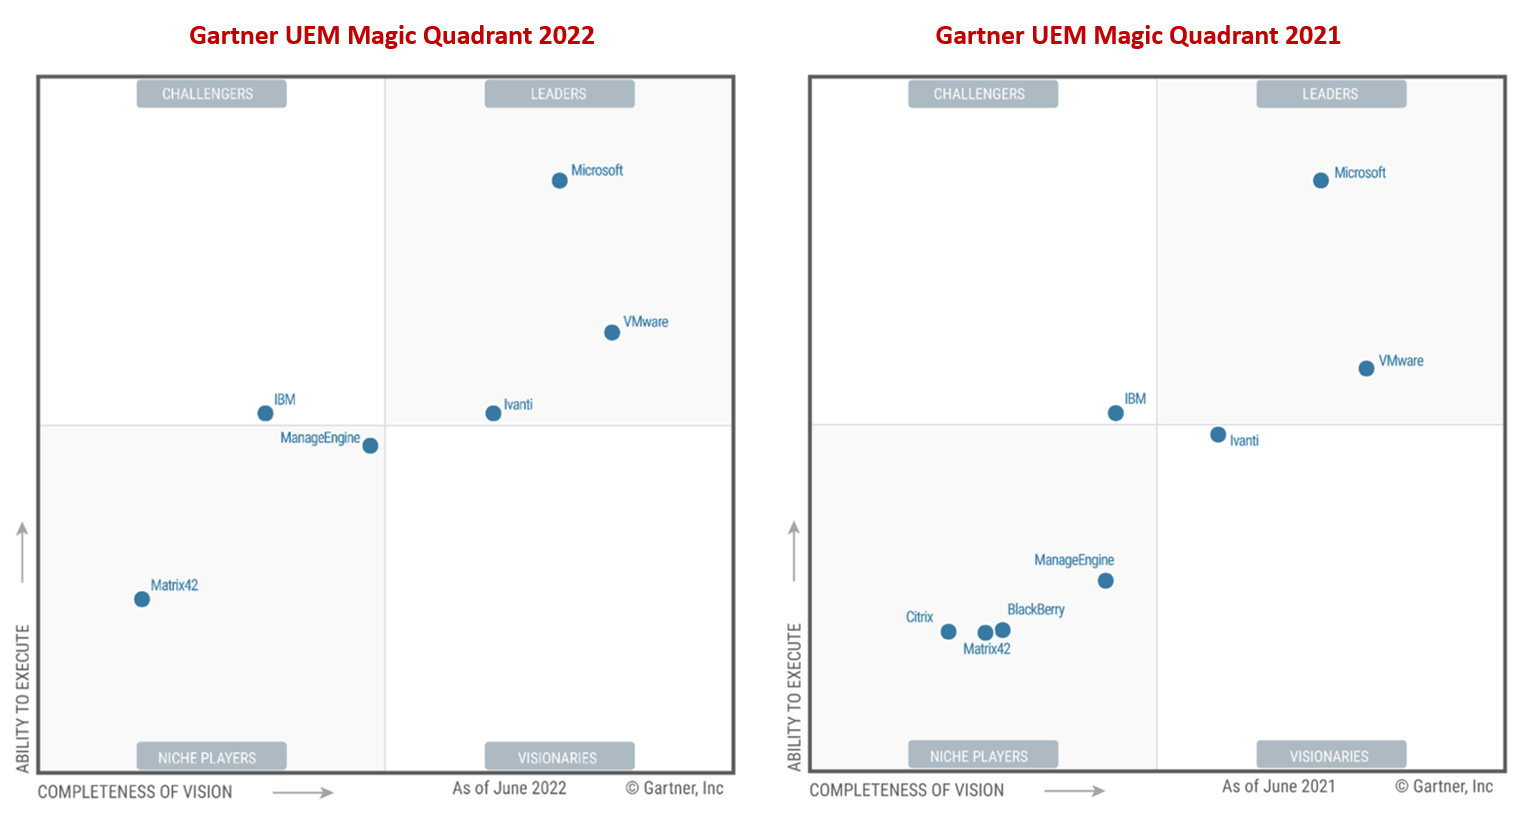 UEM Magic Quadrant 2021 v 2022